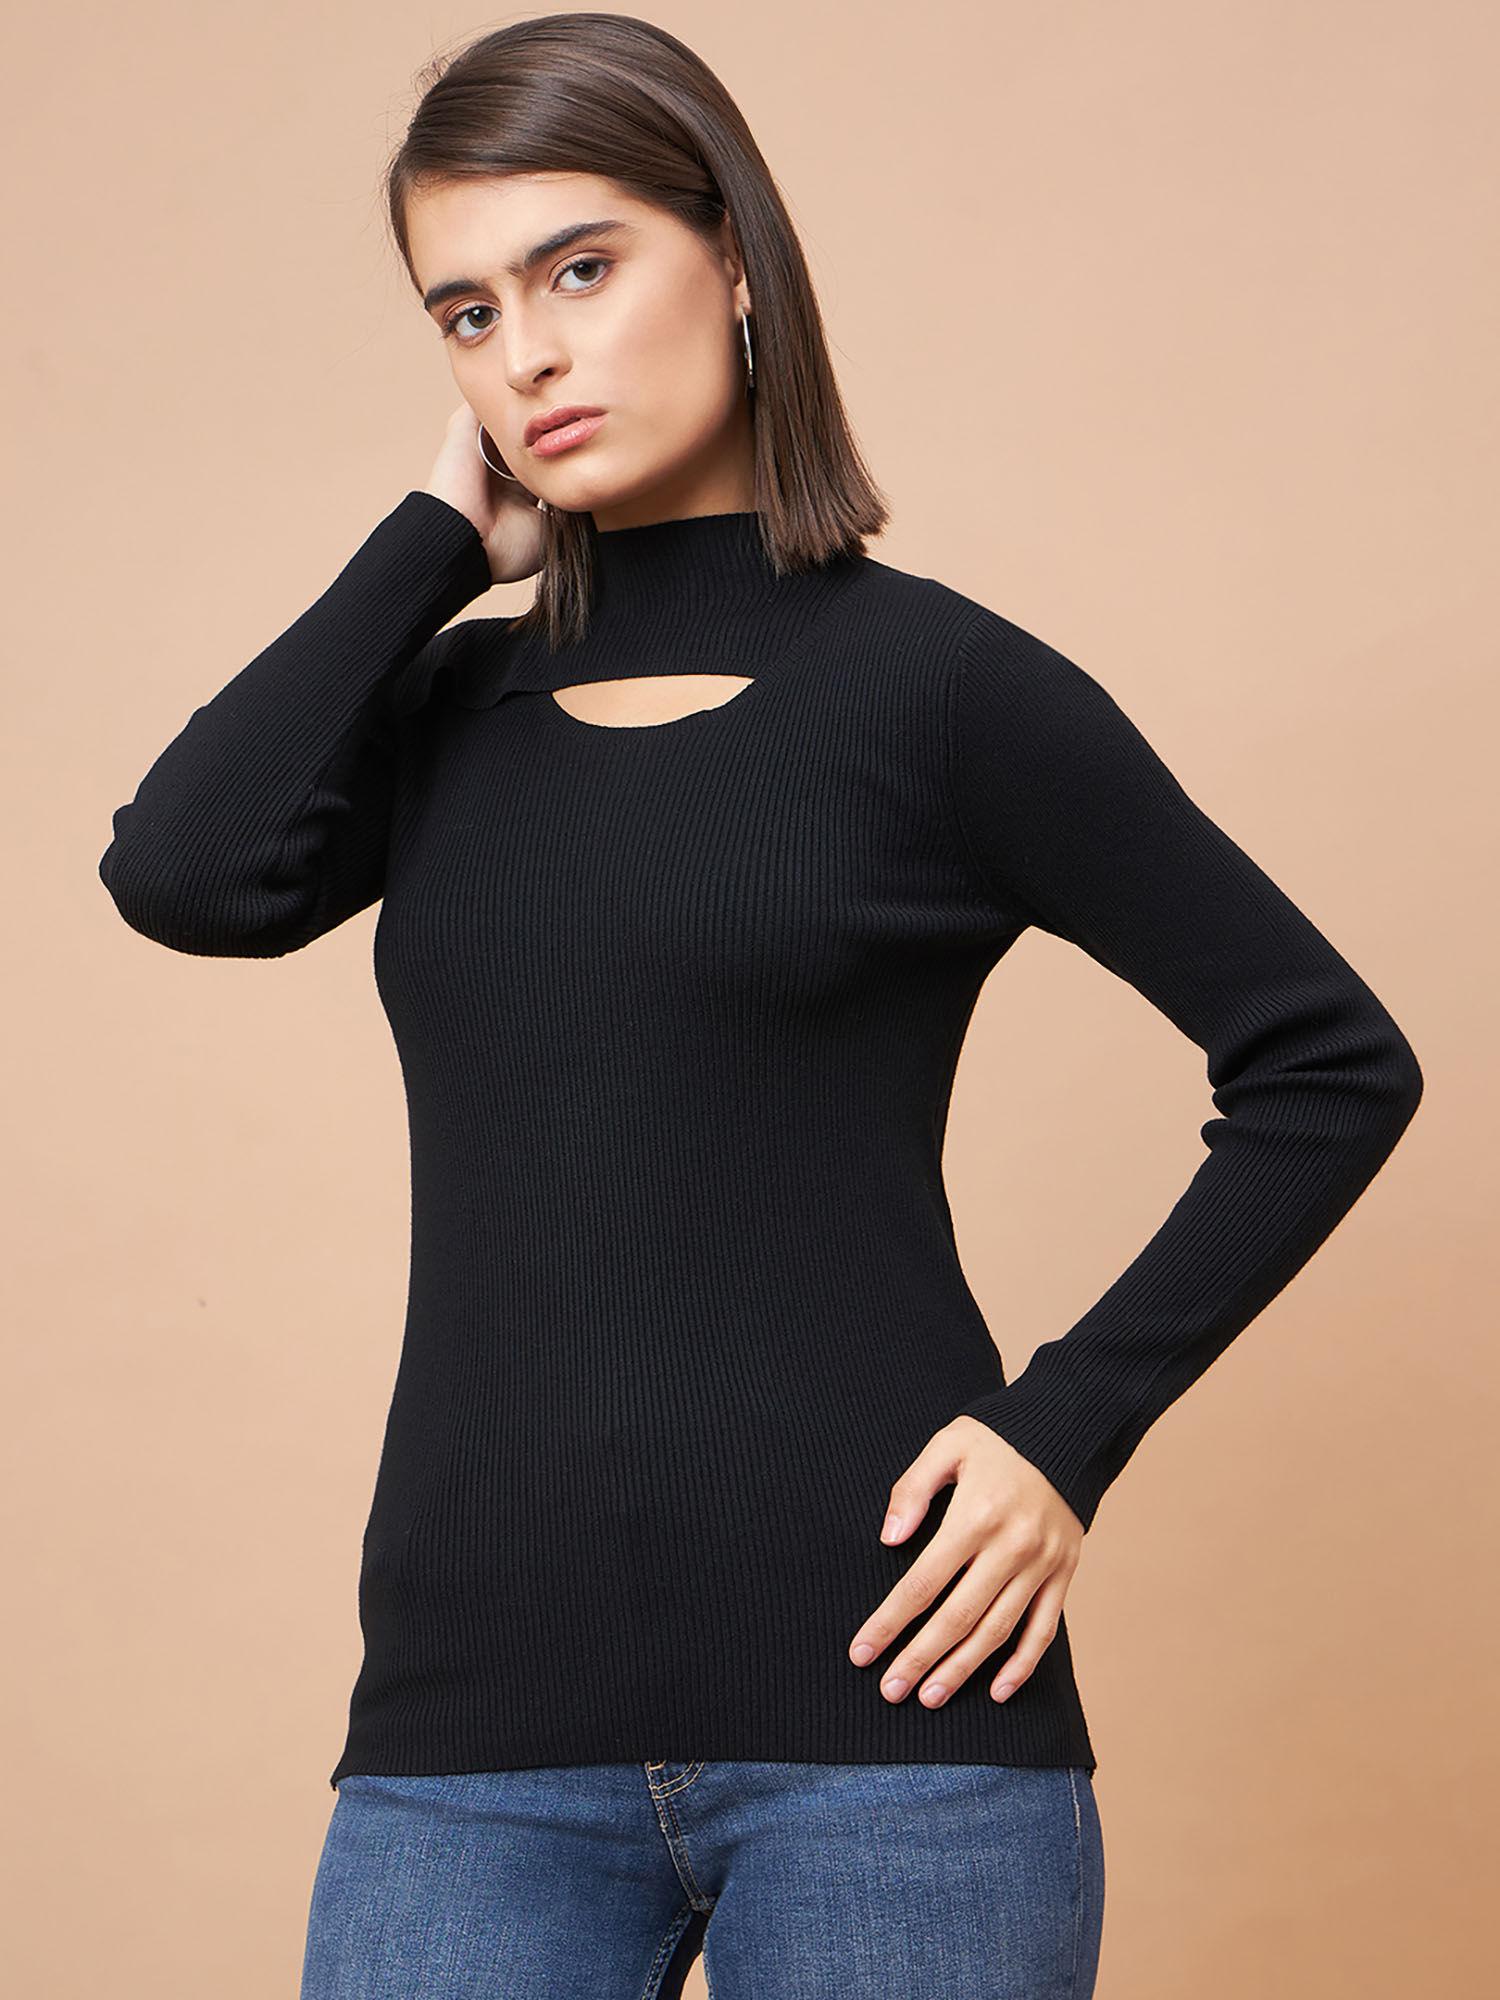 women high neck full sleeves wool fabric black sweater